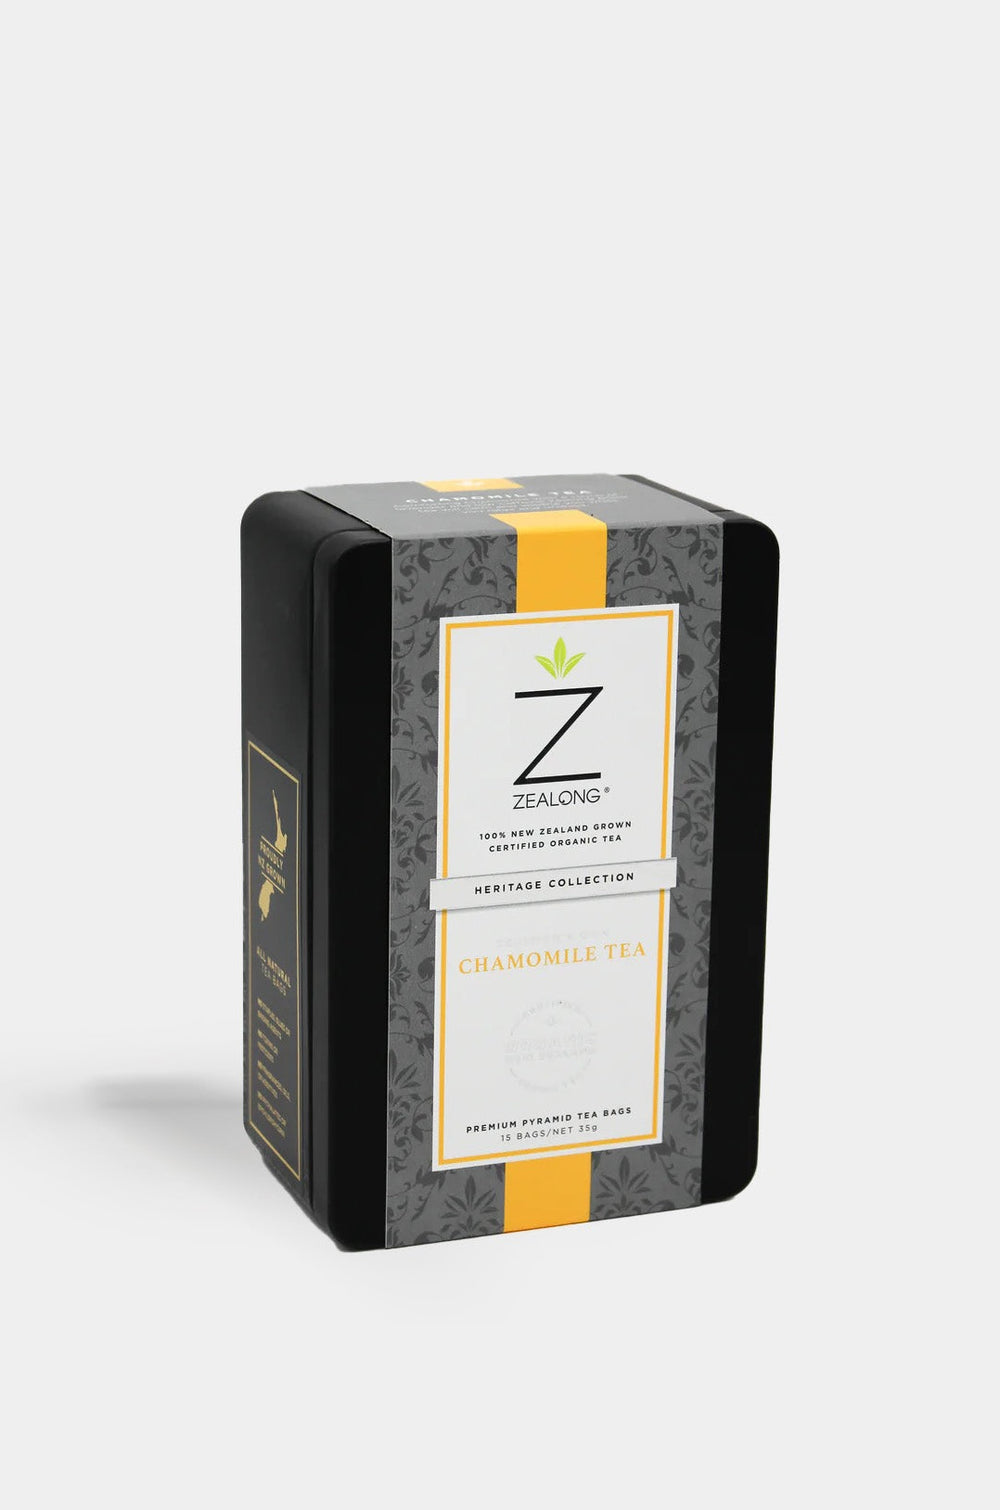 Zealong Chamomile Tea